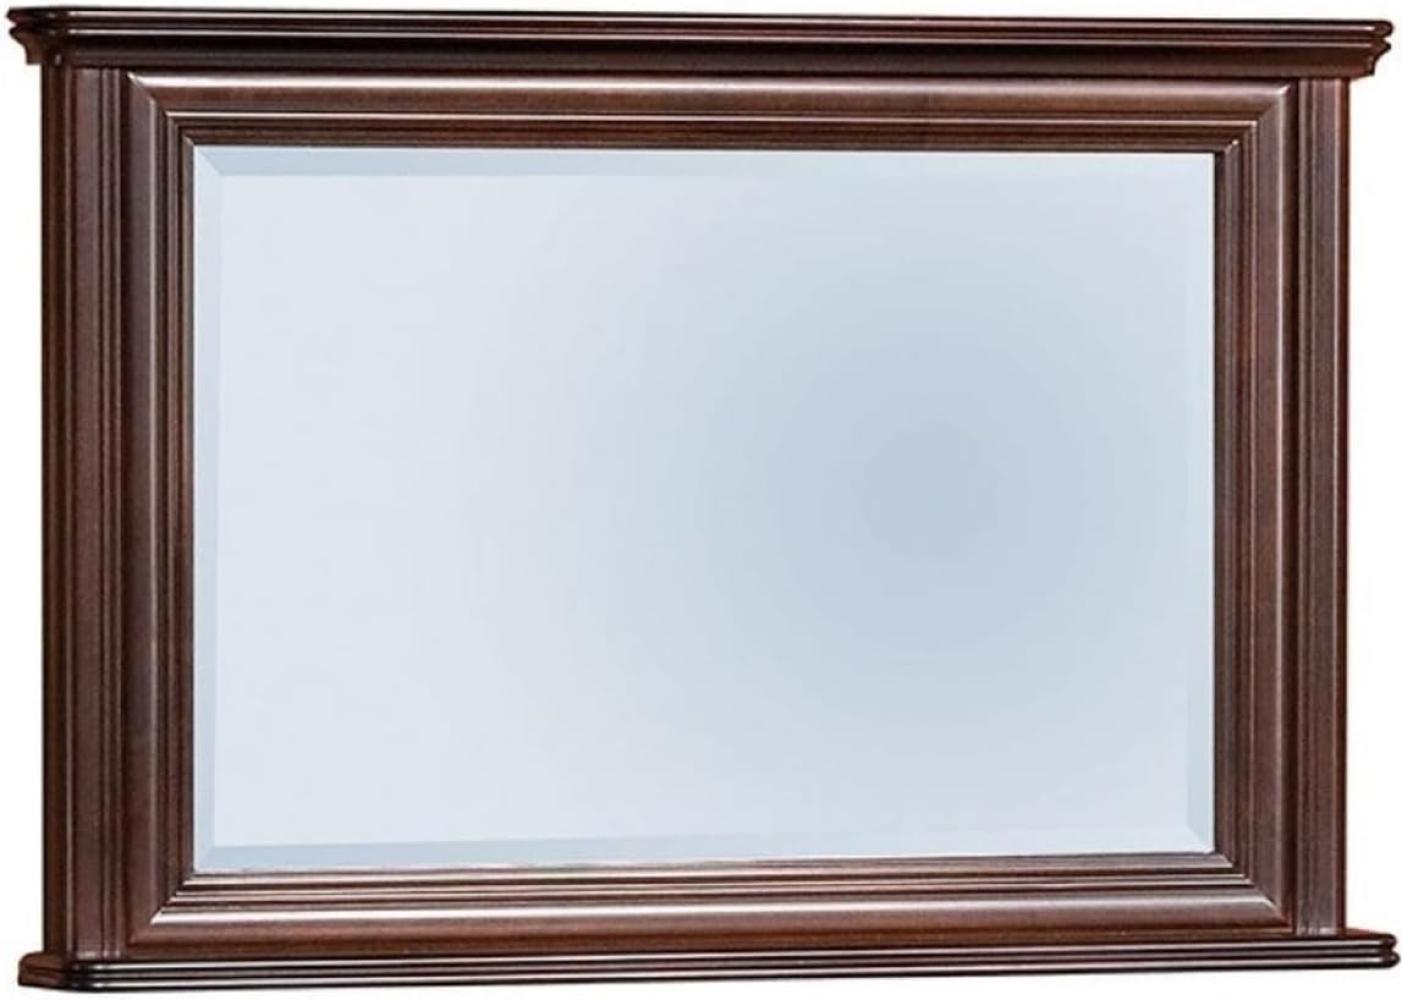 Casa Padrino Luxus Jugendstil Spiegel Dunkelbraun 107 x 12 x H. 71,2 cm - Rechteckiger Massivholz Wandspiegel - Schlafzimmer Spiegel - Barock & Jugendstil Schlafzimmer Möbel Bild 1